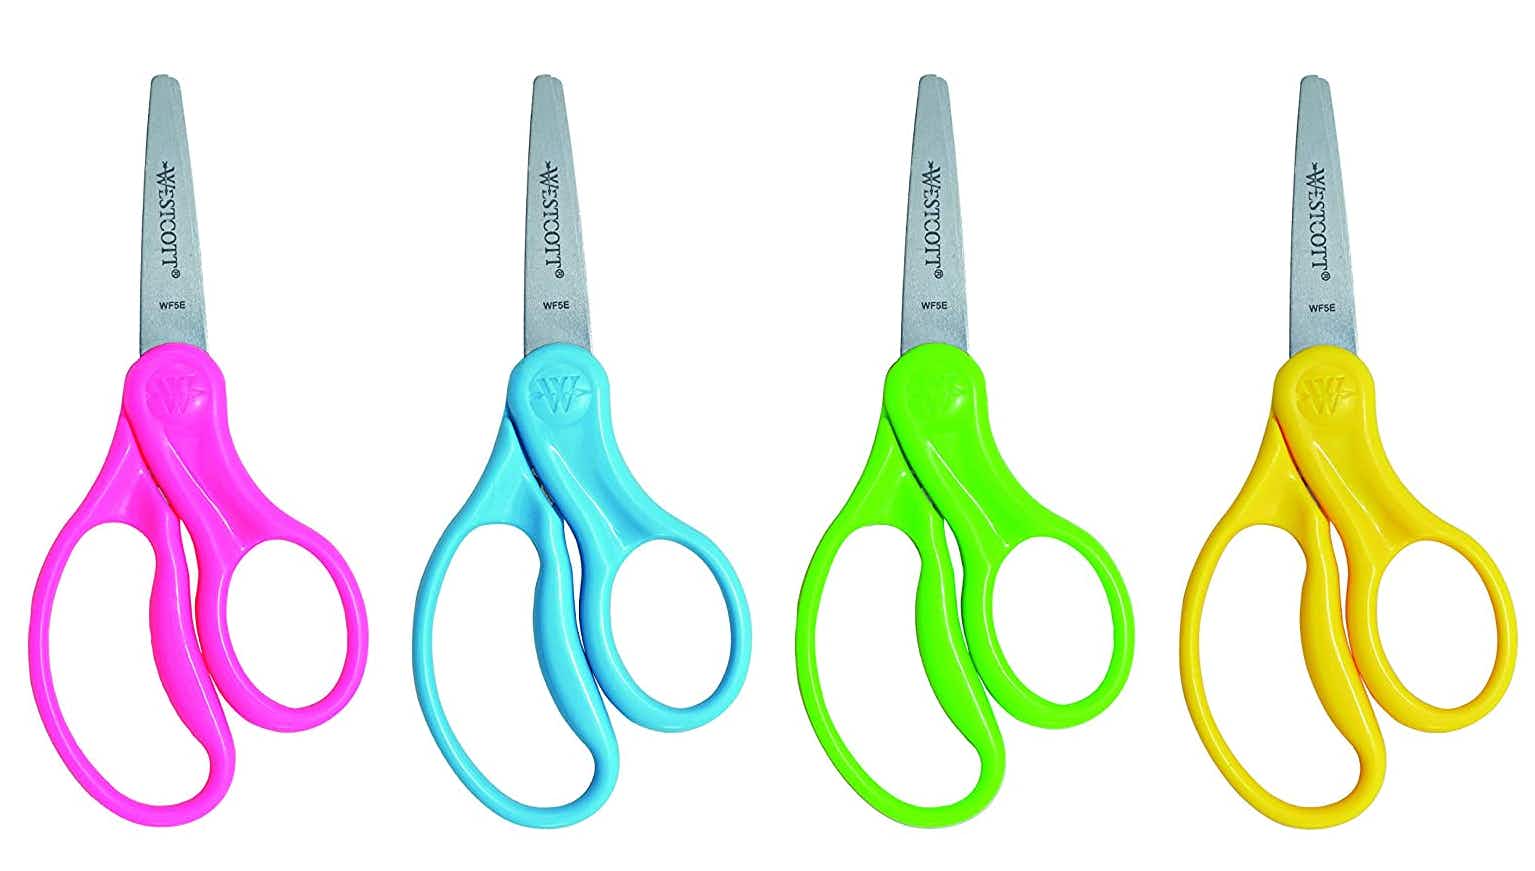 A set of four colorful Westcott scissors.